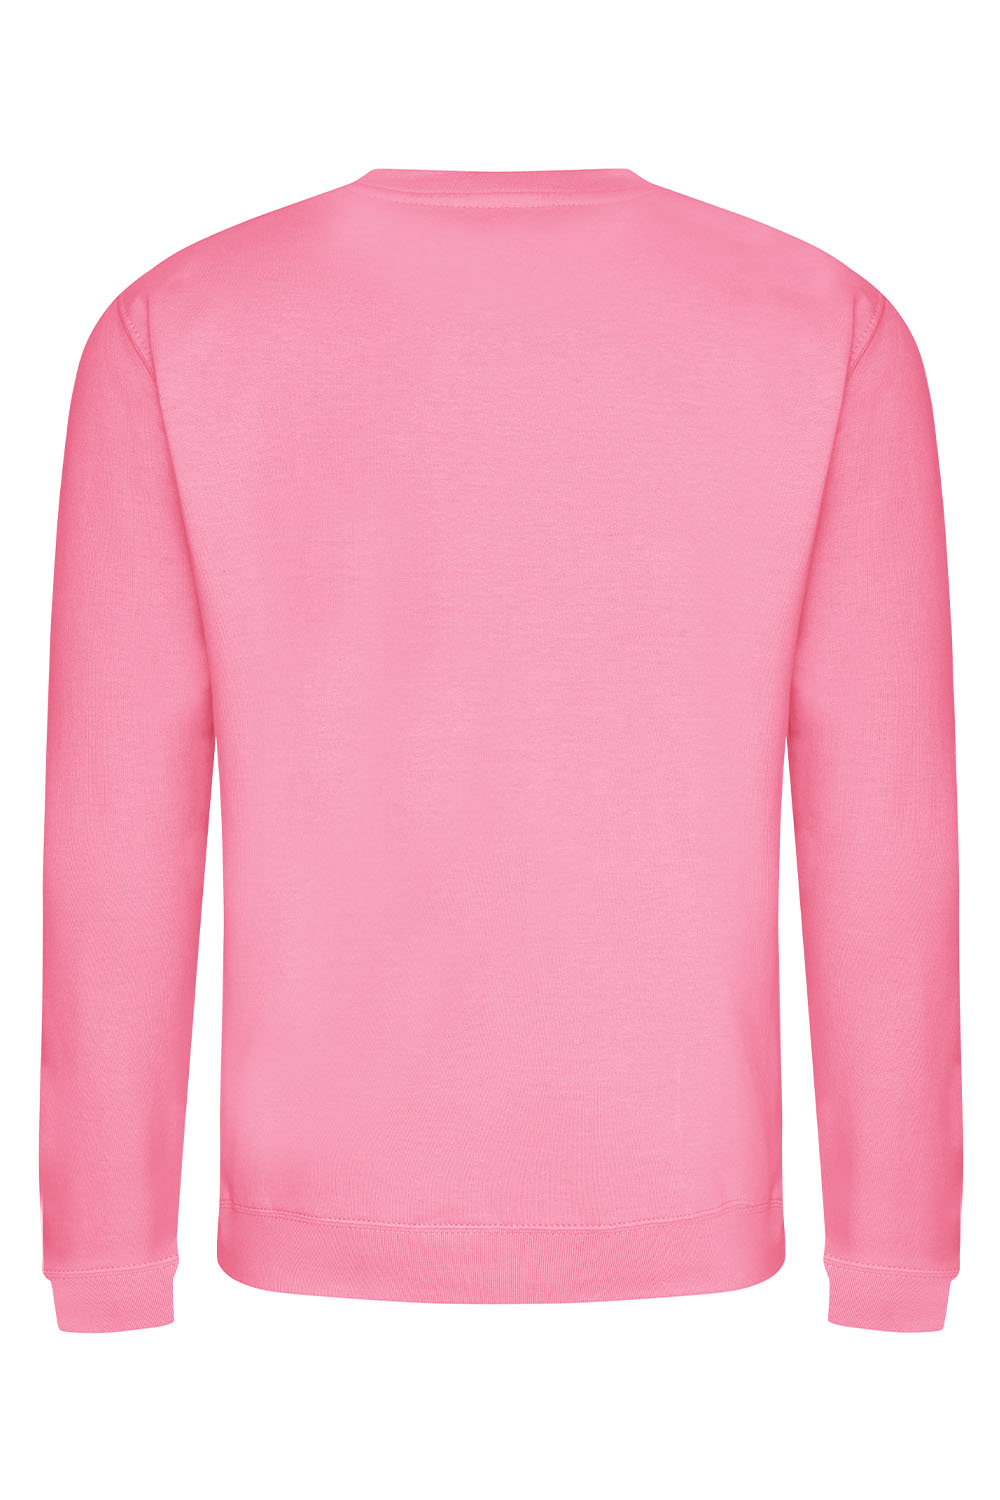 Santa Monica Sweatshirt In Candy Floss Pink  (Custom Pack)